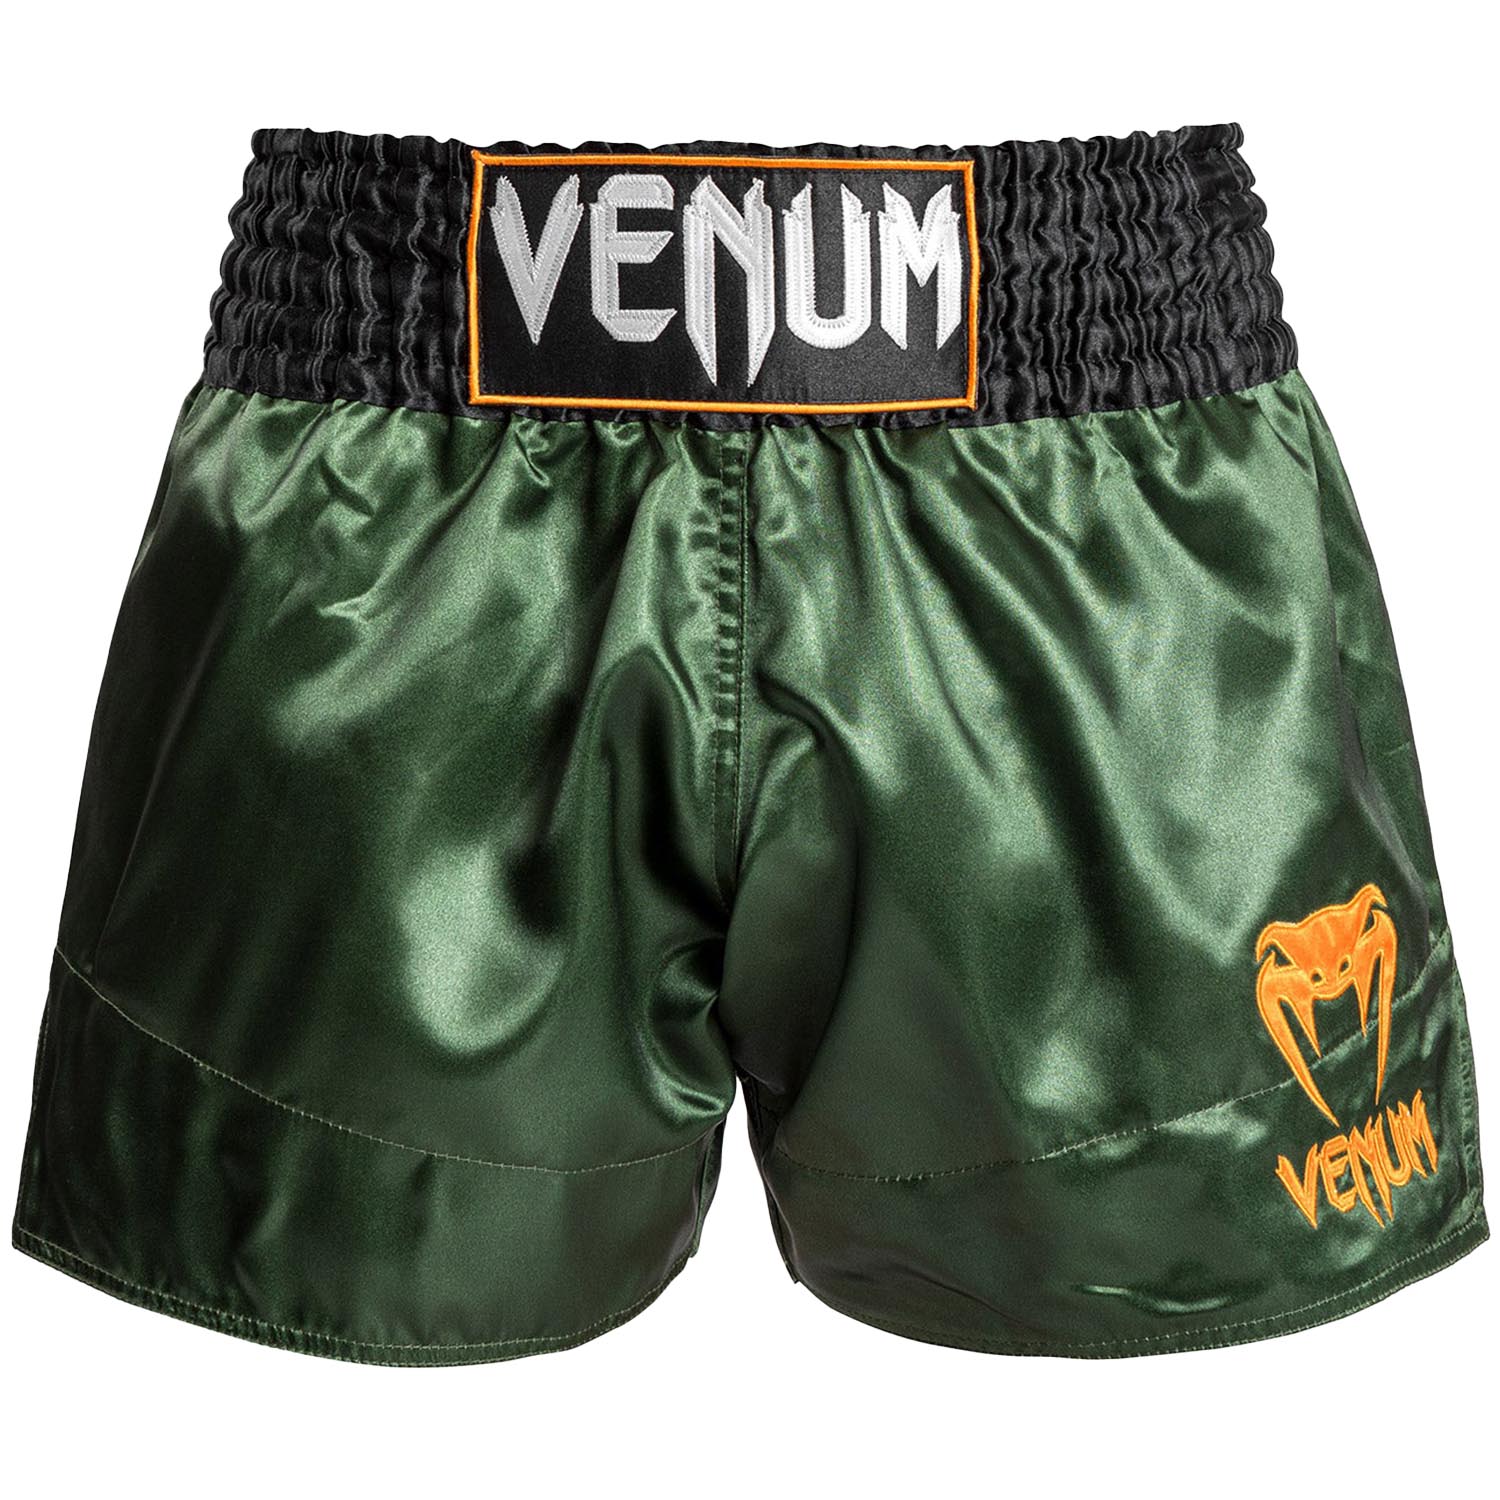 VENUM Muay Thai Shorts, Classic, green-black-gold, M